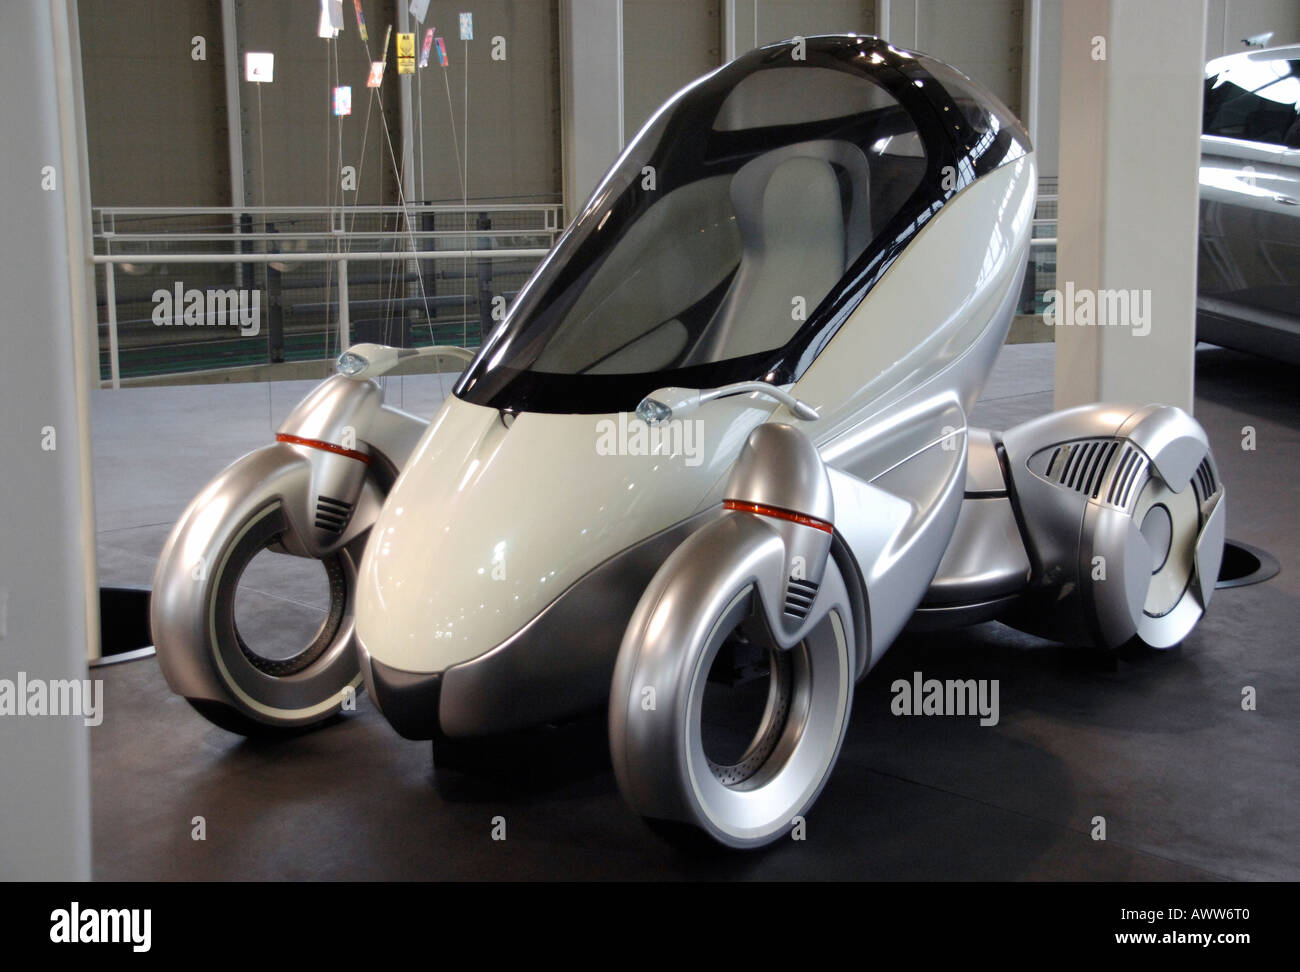 Car of the future - design concept at Toyota Odaiba technology showcase, Tokyo Japan Stock Photo